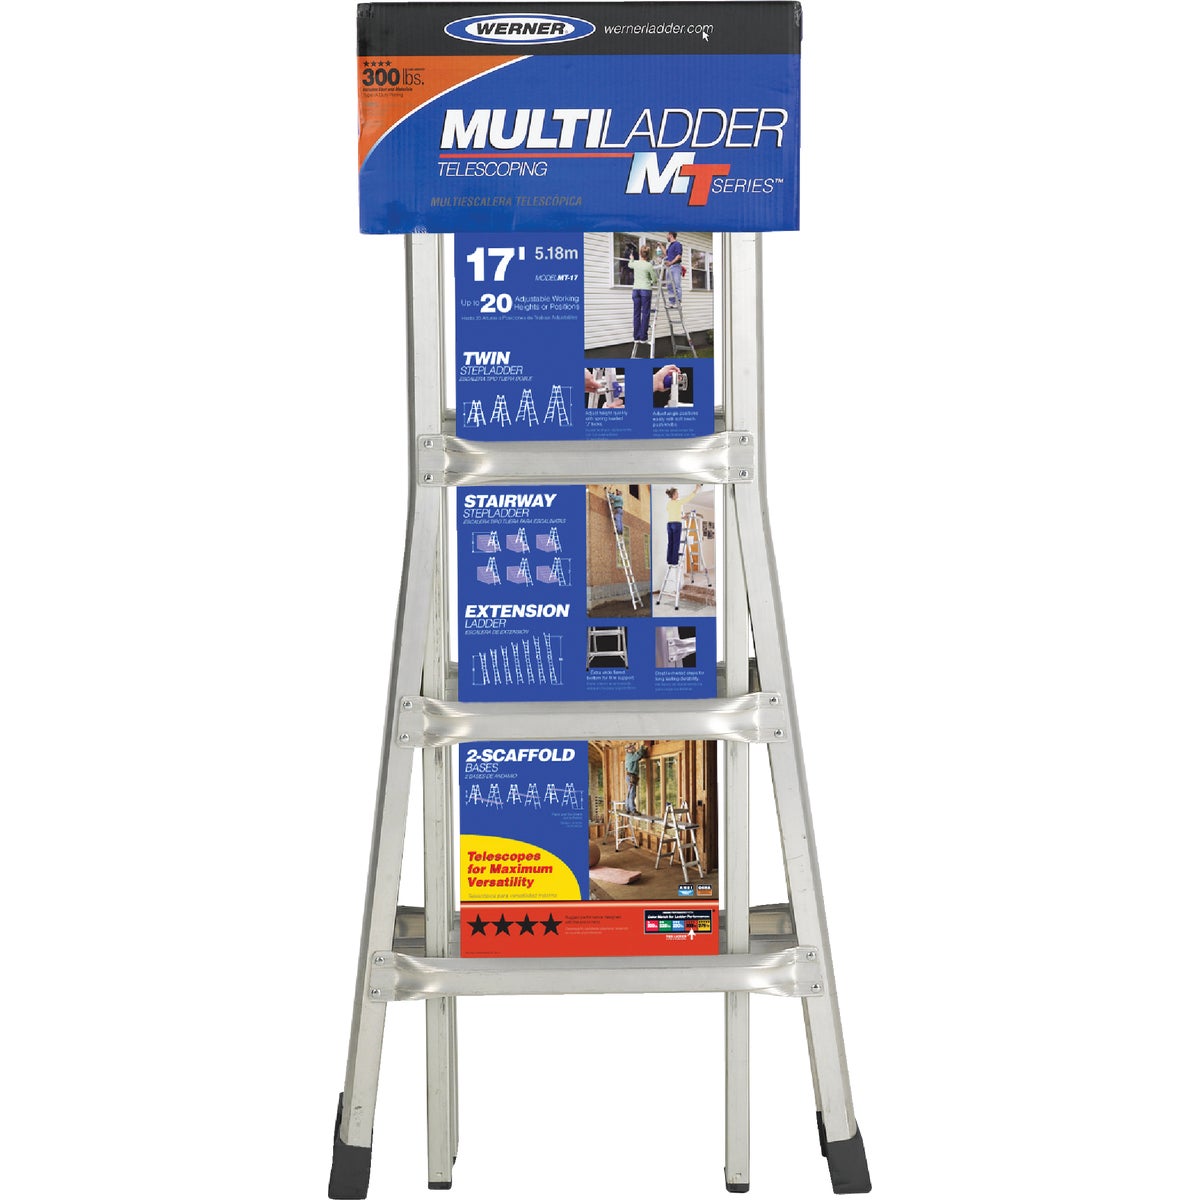 Item 772436, A sturdy aluminum telescoping-designed ladder provides maximum versatility 